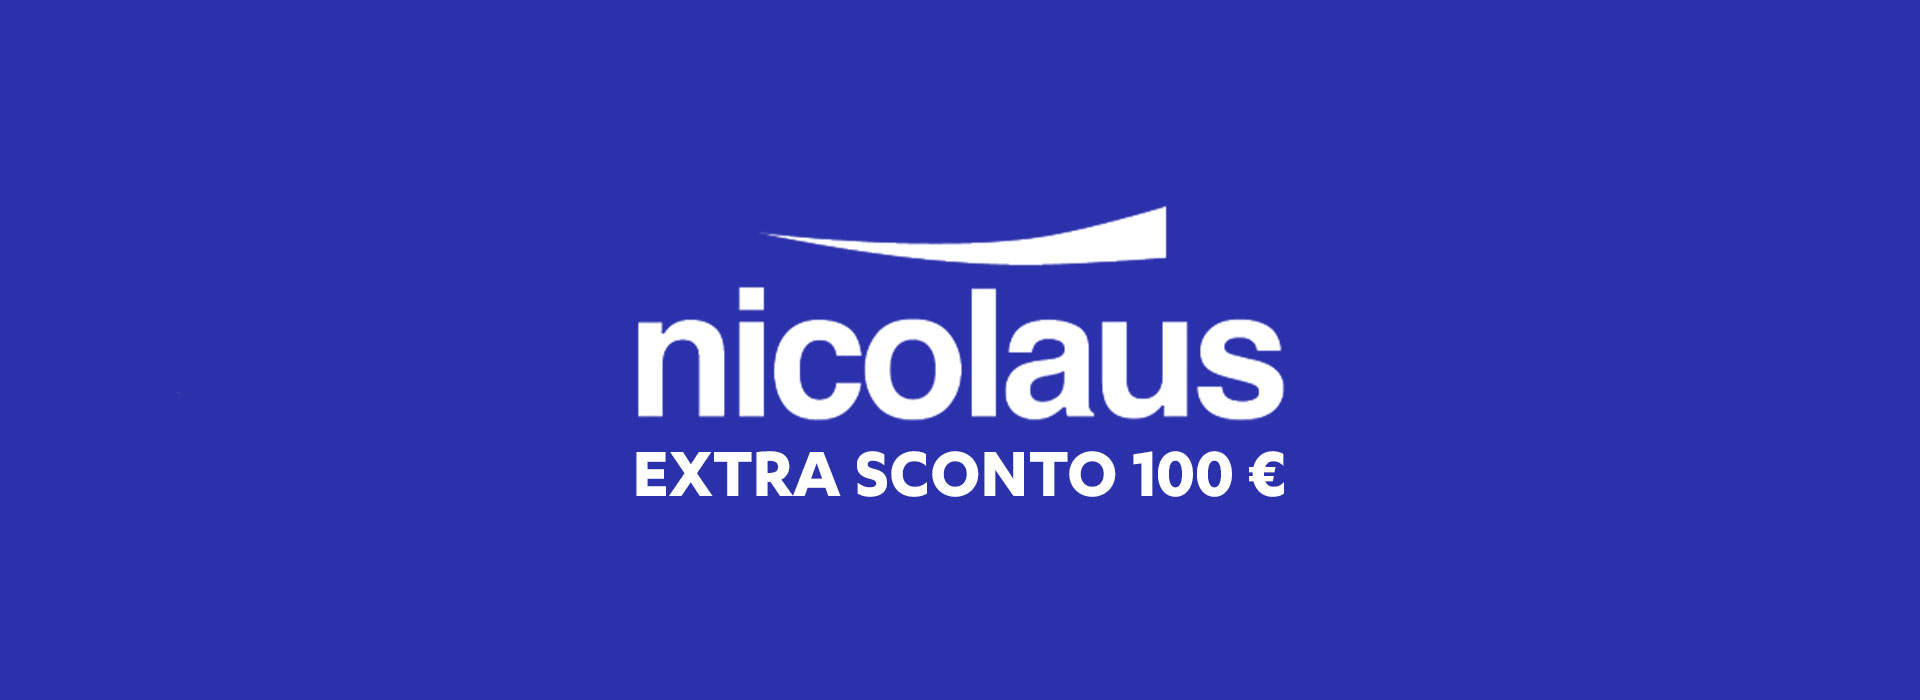 Flash Sale Nicolaus: EXTRA SCONTO 100 €